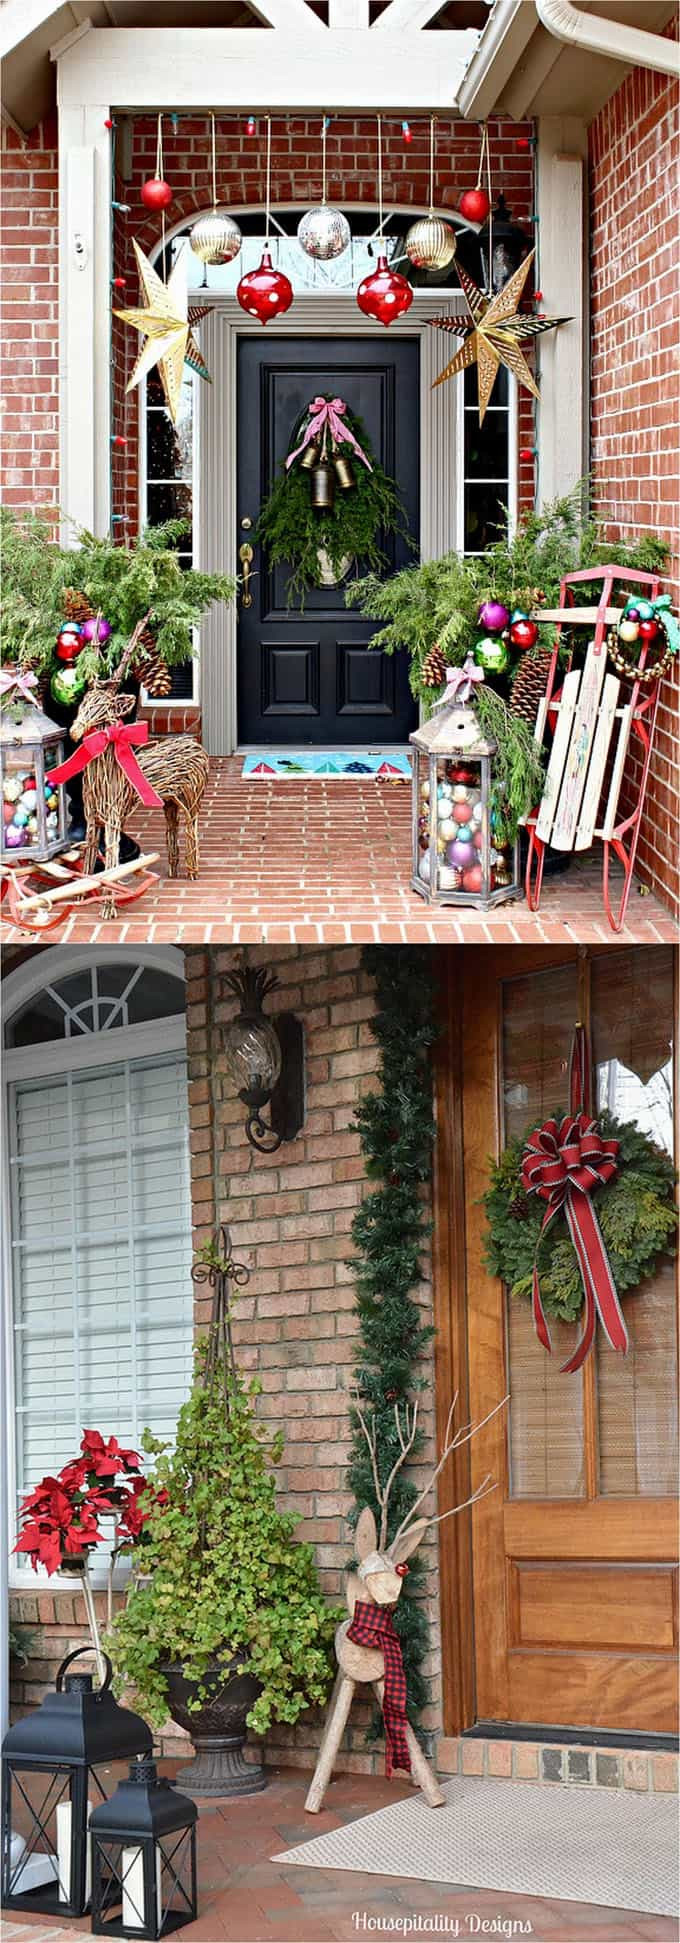 DIY Christmas Yard Decoration
 Gorgeous Outdoor Christmas Decorations 32 Best Ideas